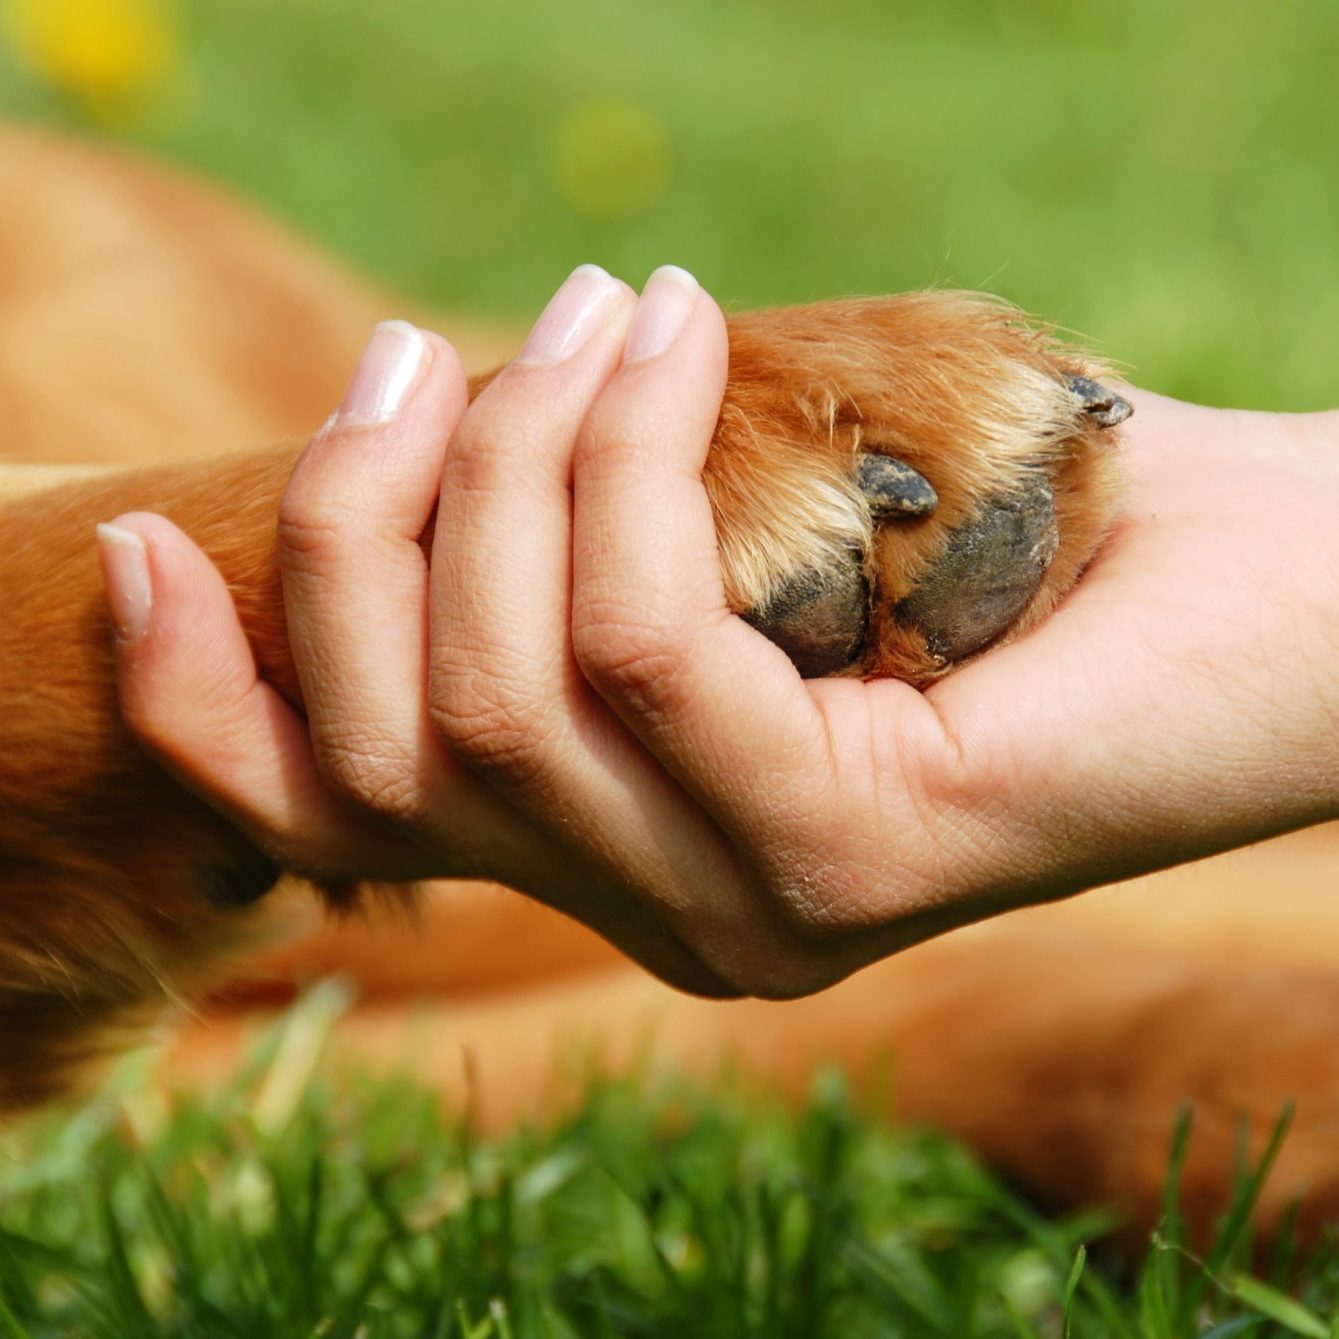 Yellow dog paw and human hand shaking, friendship